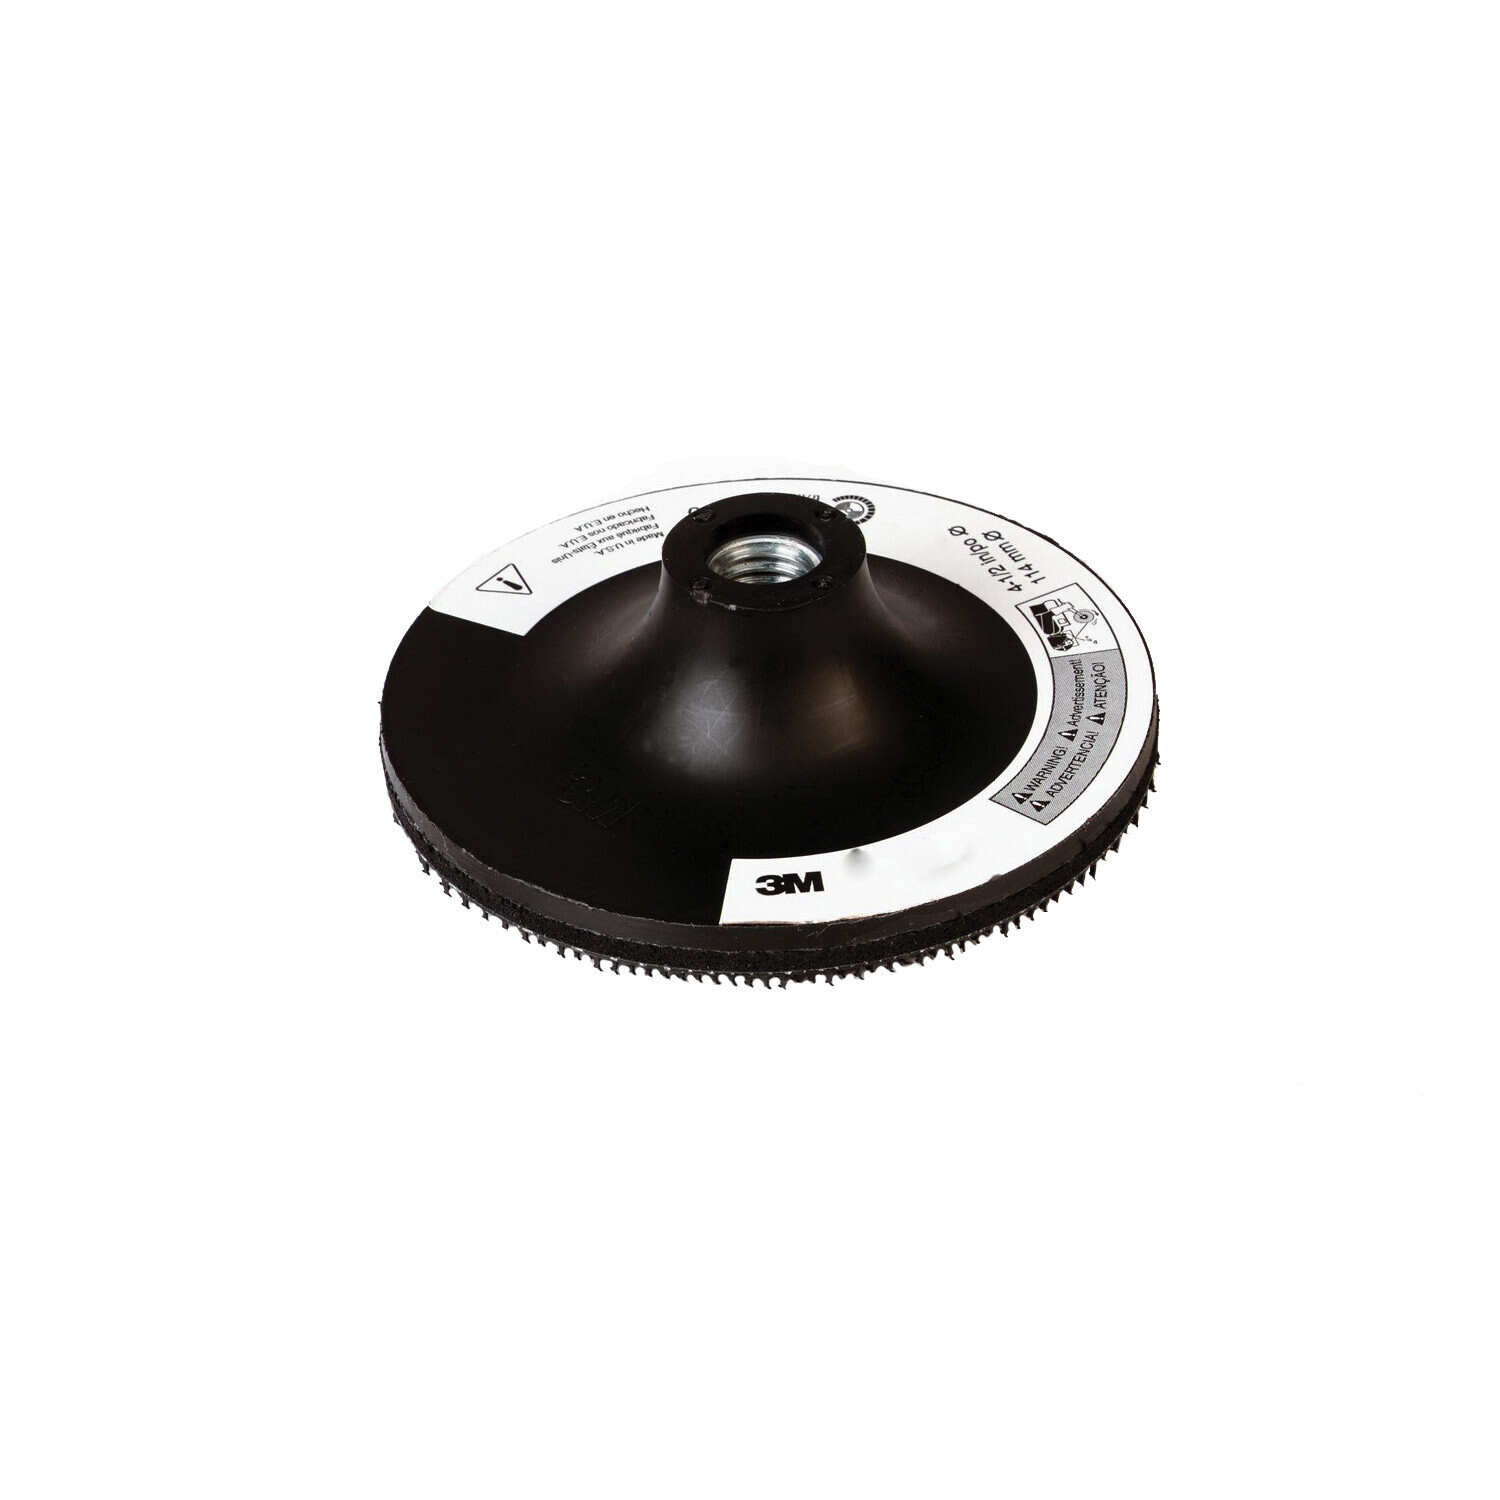 3M™ 9145 Regular Disc Pad Holder - For Use w/ Random Orbital Sanders - Rotary Sanders and Disc Sanders - Black